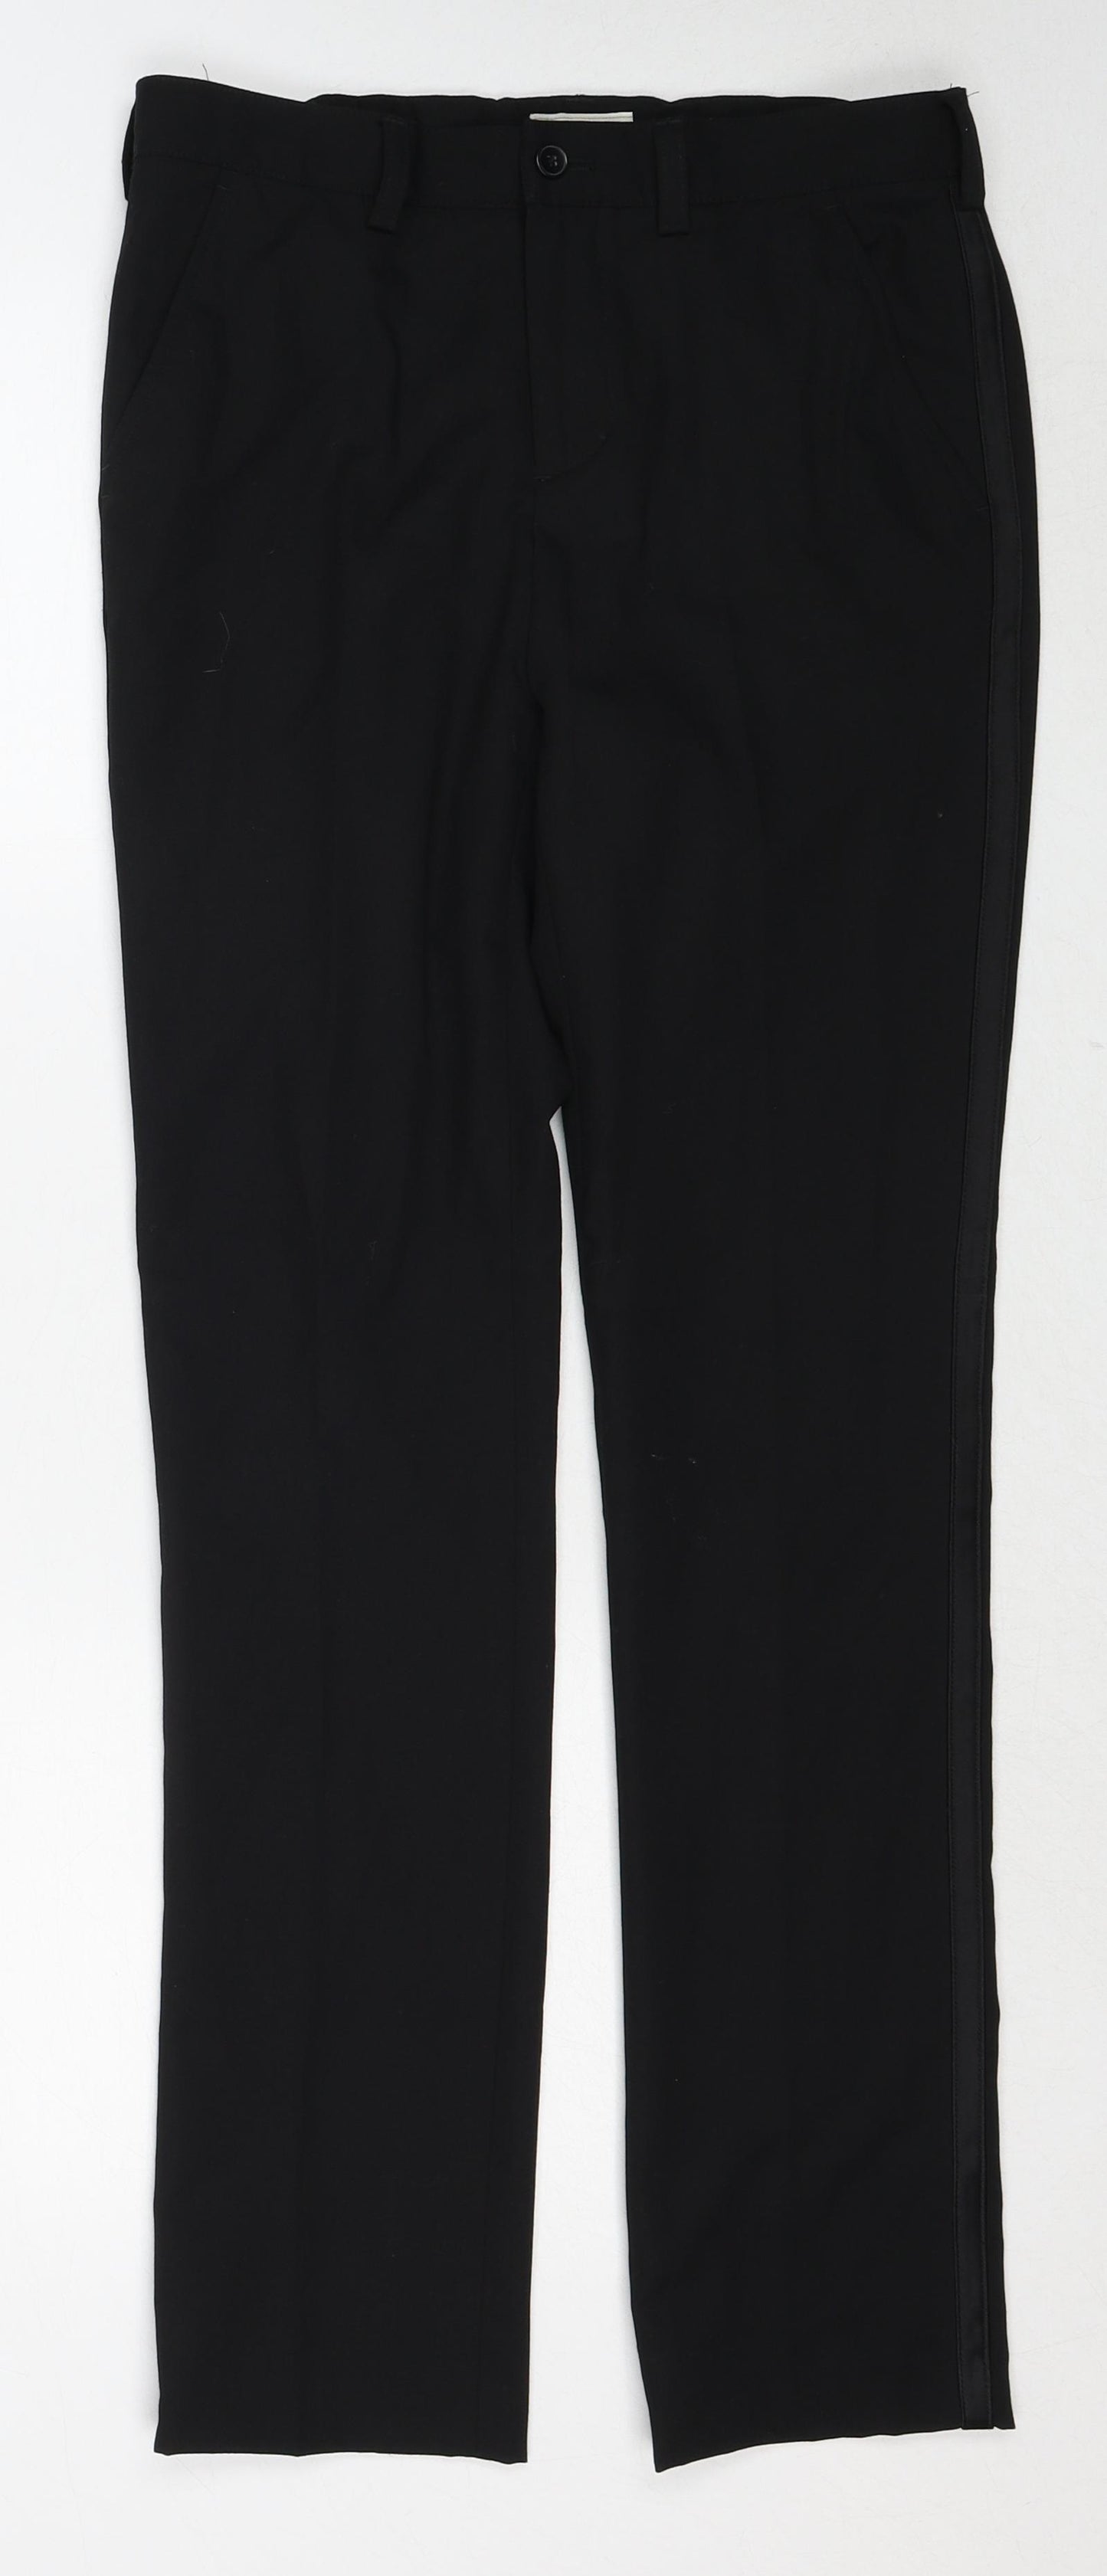 John Lewis Boys Black Polyester Dress Pants Trousers Size 13 Years Regular Zip